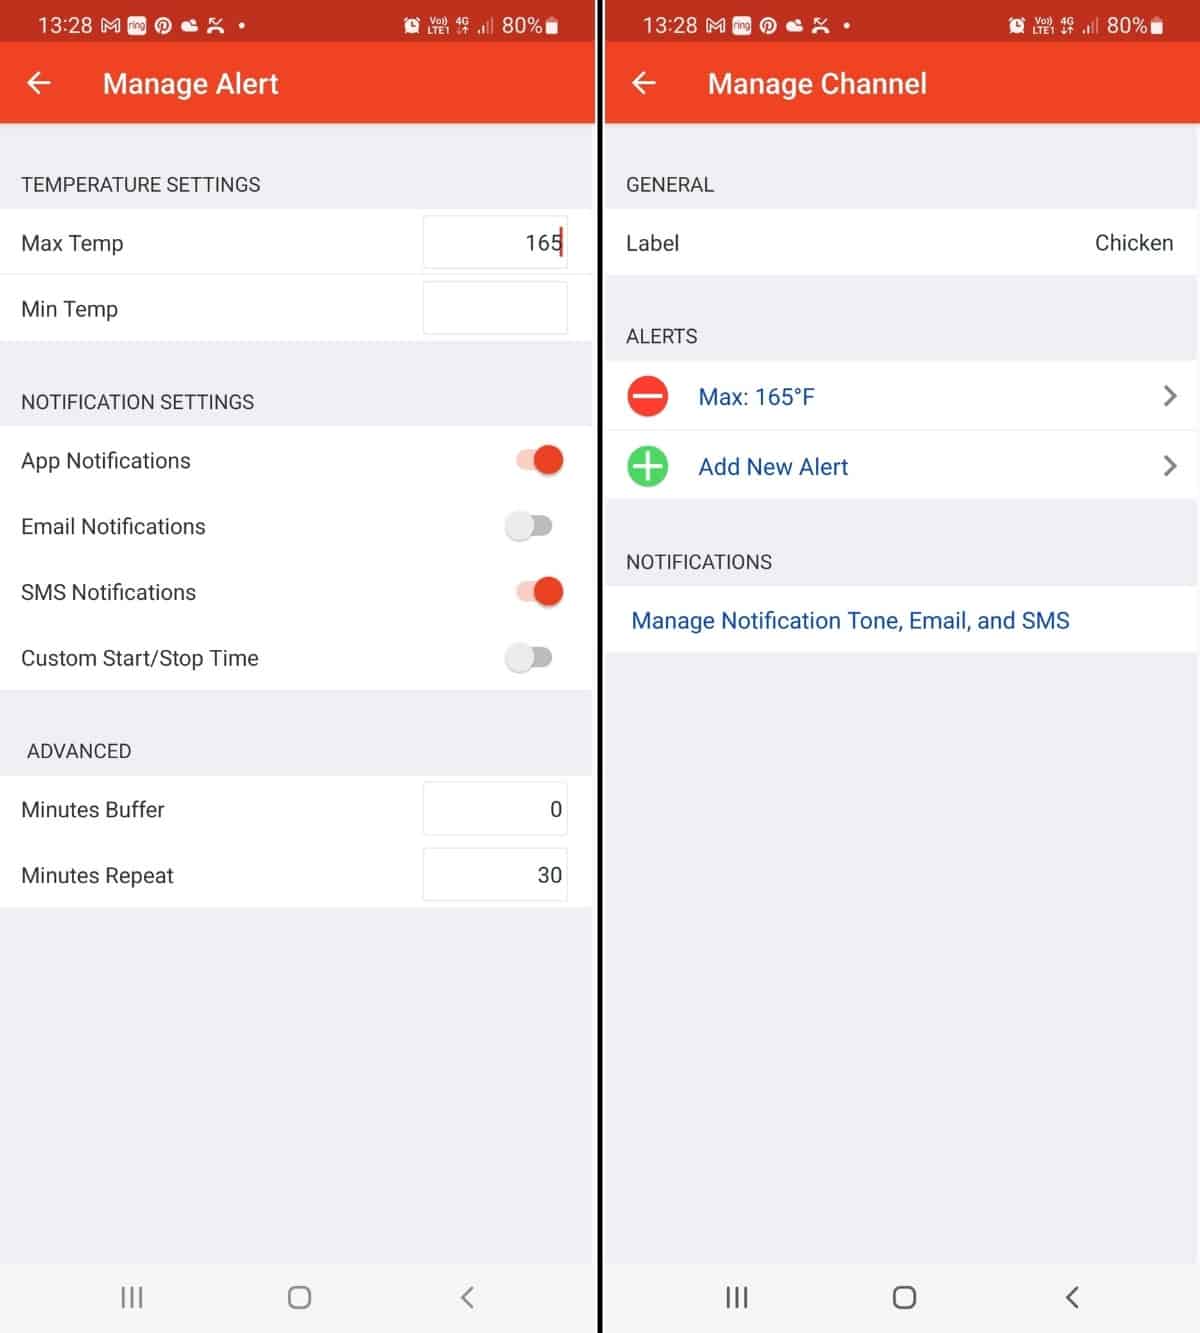 FireBoard app screenshots showing alerts settings screen, and an alert being received